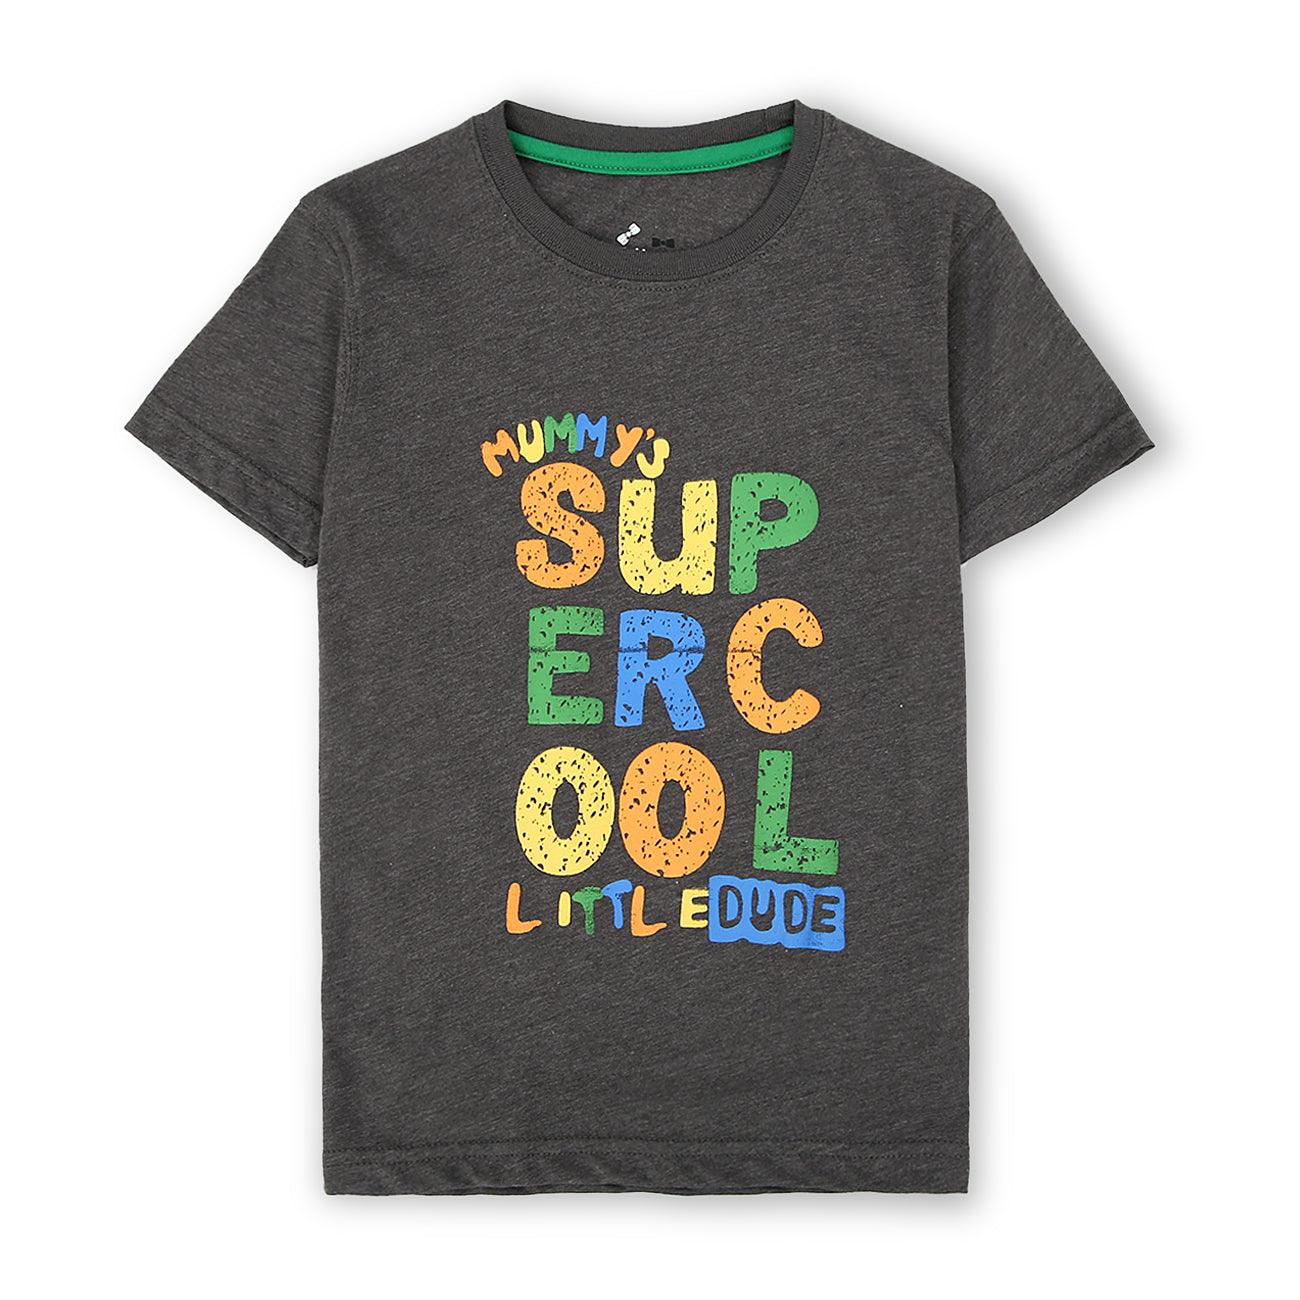 Boys Fashion "Super Cool" Printed Soft Cotton T-Shirt 9 MONTH - 10 YRS (MT-10916) - Brands River